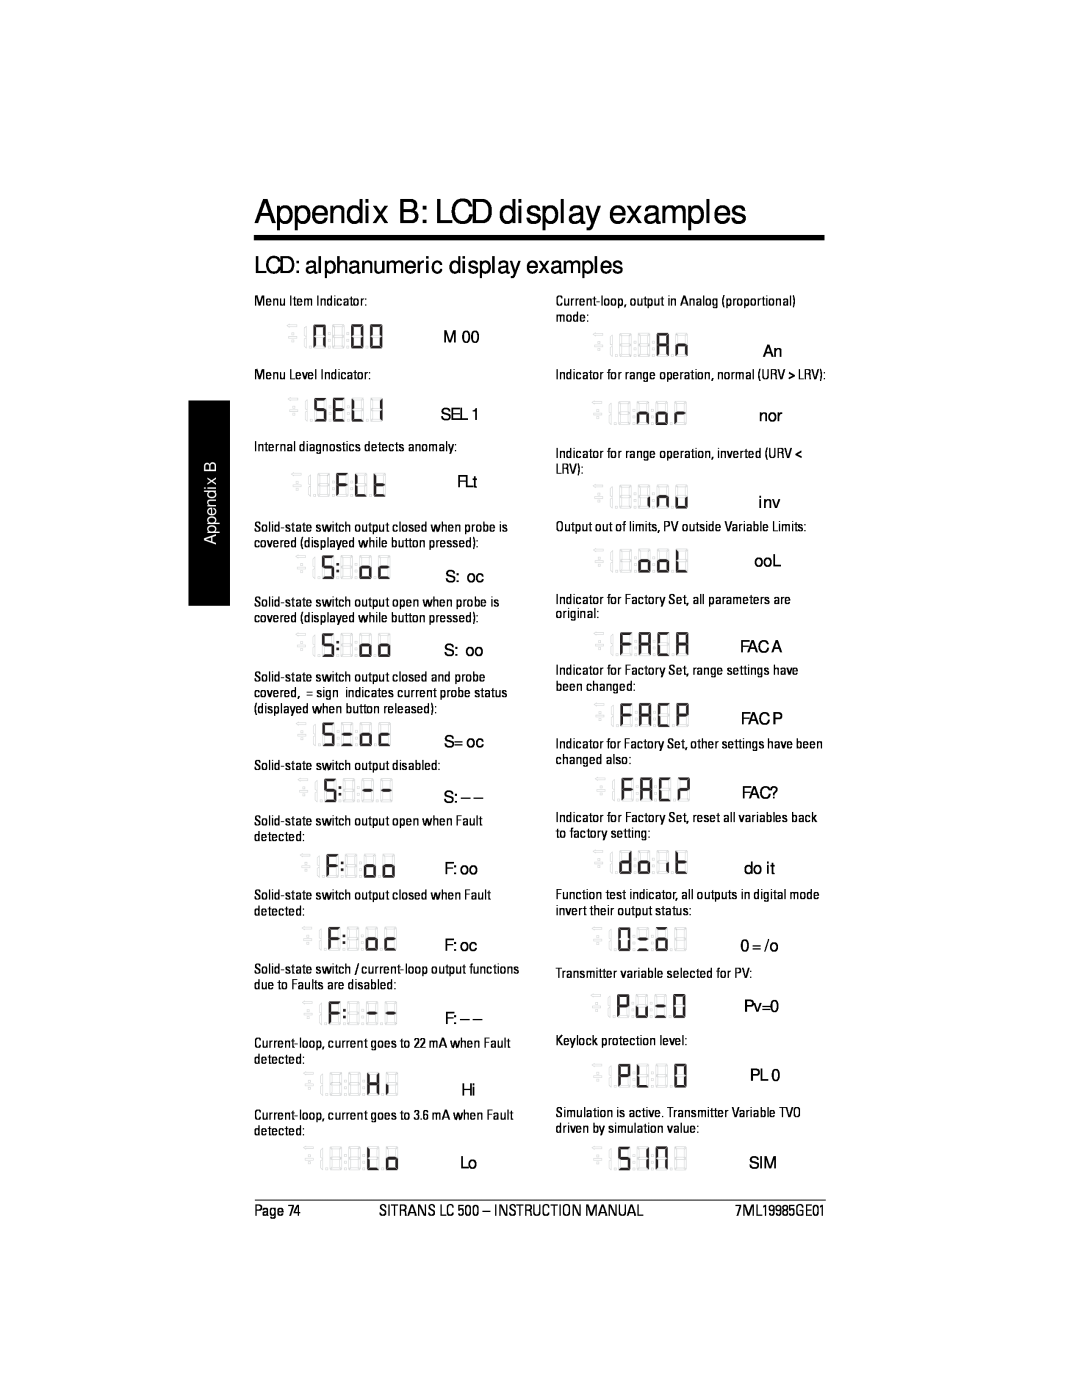 Siemens LC 500, Sitrans instruction manual Appendix B LCD display examples, LCD alphanumeric display examples 